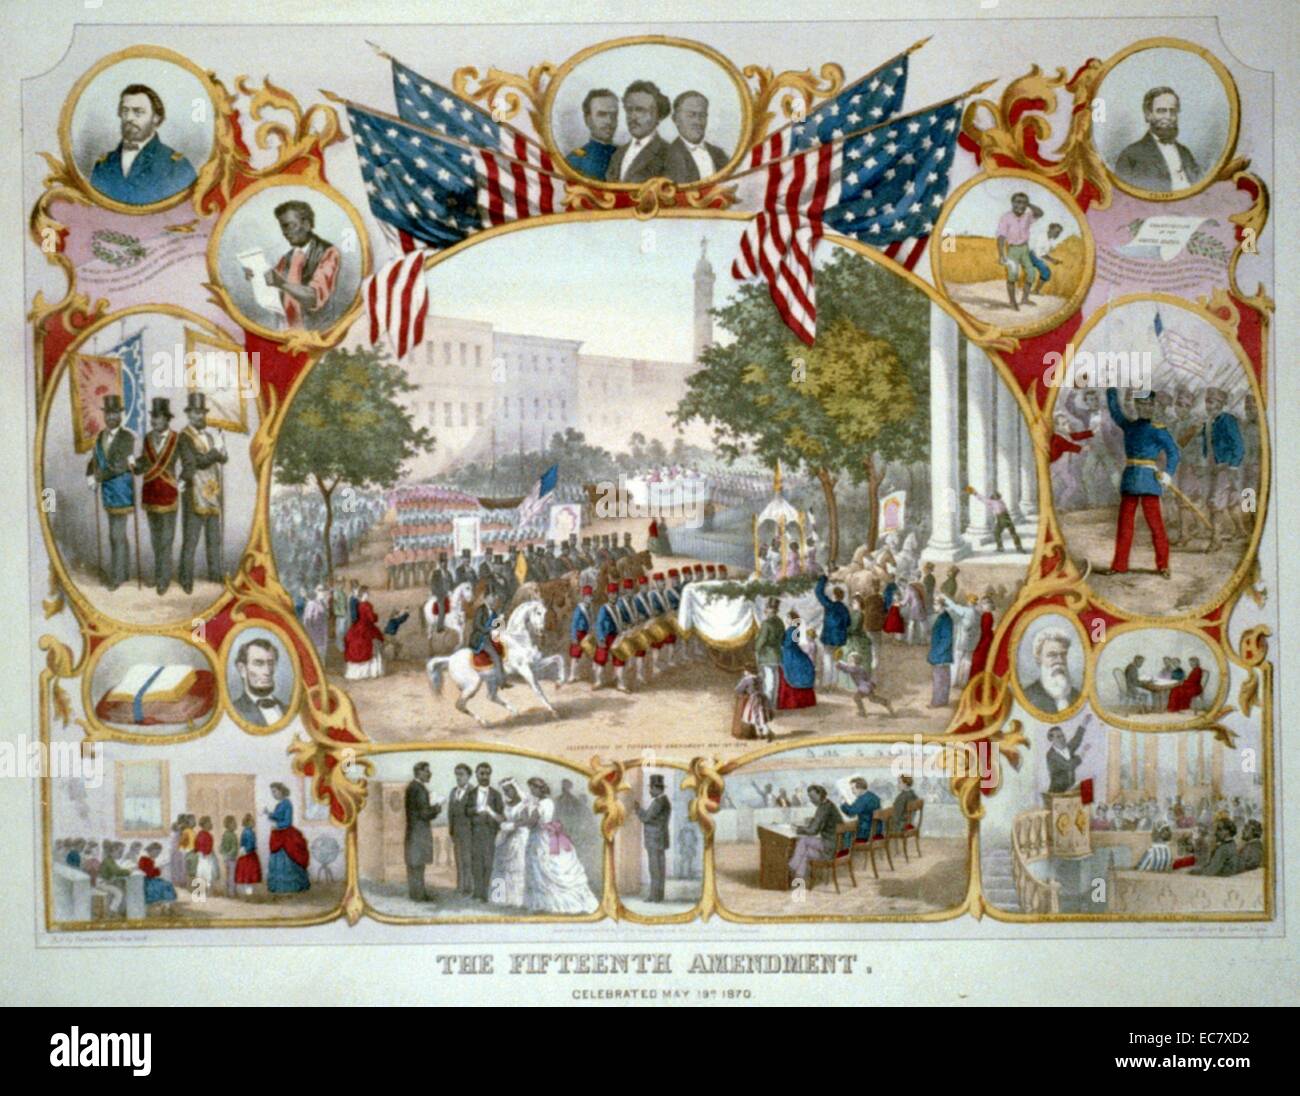 Commemoration of The Fifteenth Amendment. Stock Photo